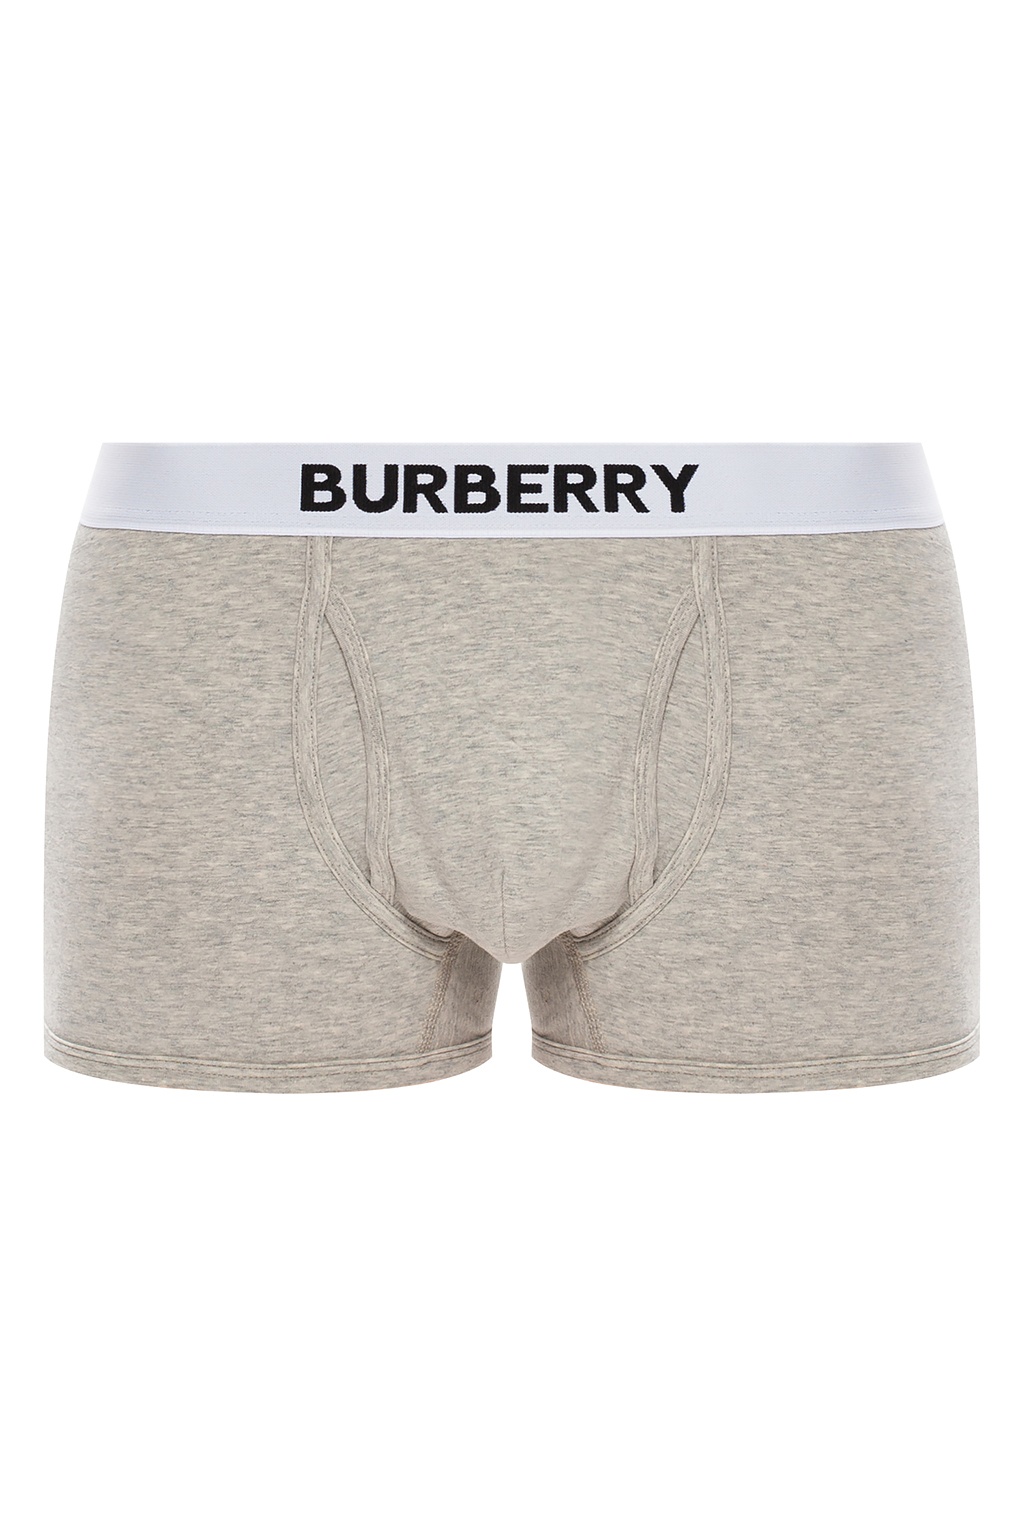 IetpShops GB - Grey Boxers with logo Burberry - Burberry Eyewear Brille mit  eckigem Gestell Weiß